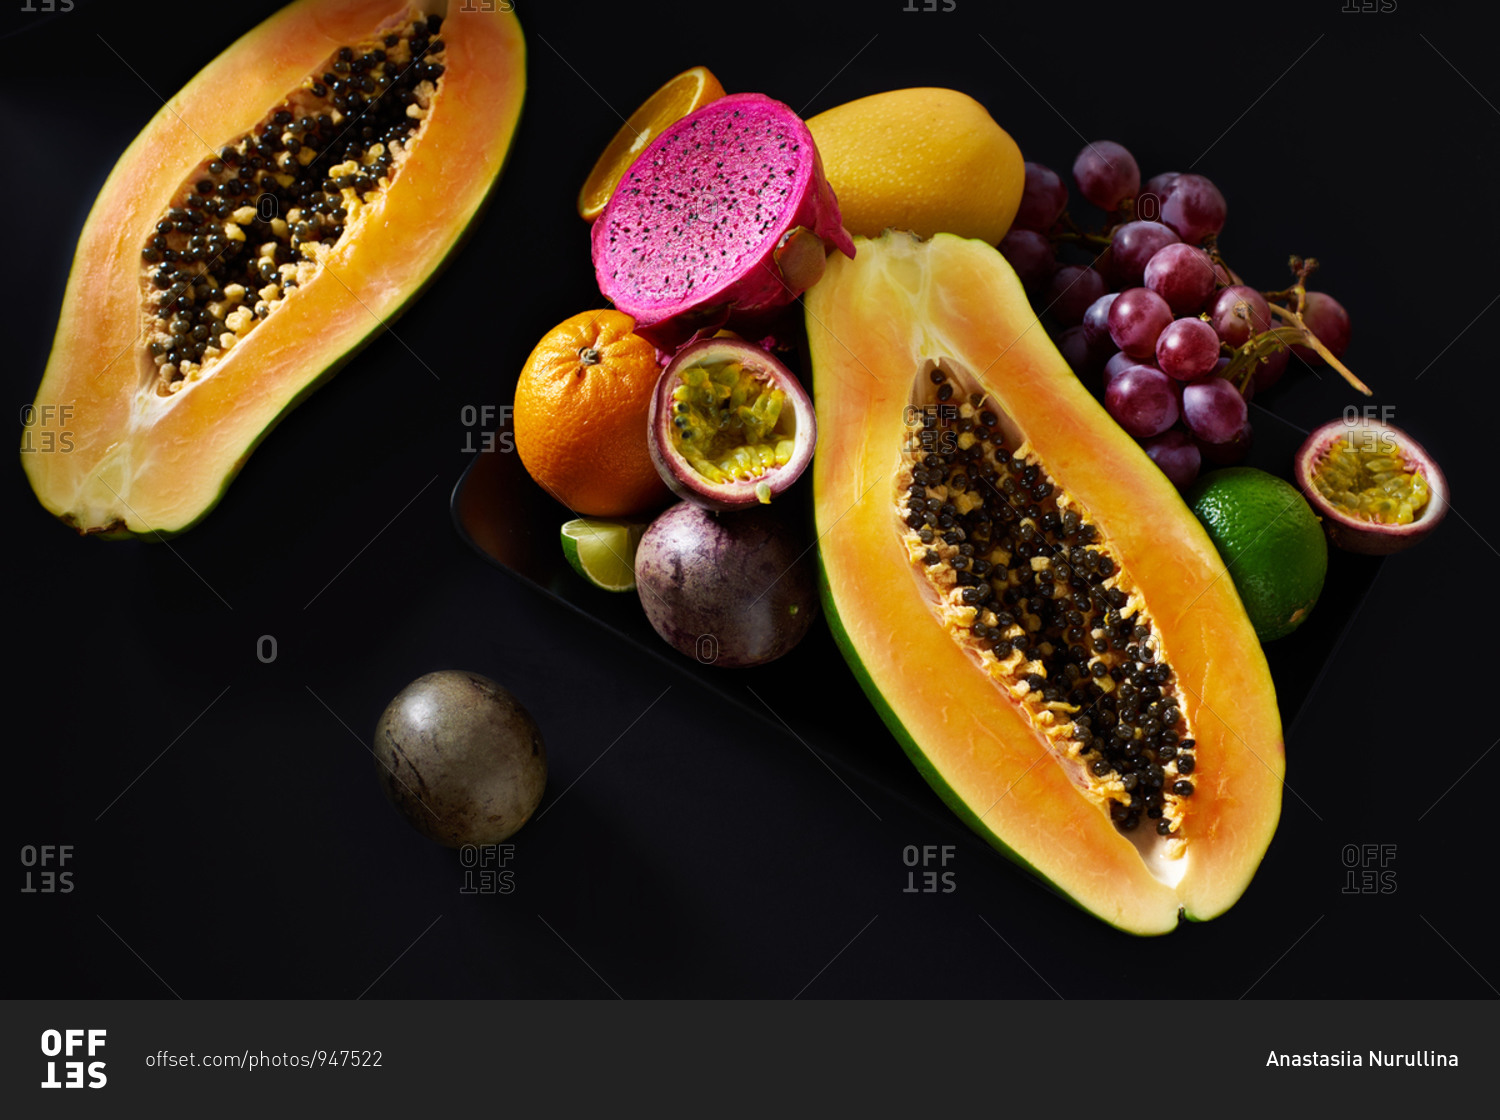 Still life with sliced papaya, grapes, pitaya and tropical fruits on black background